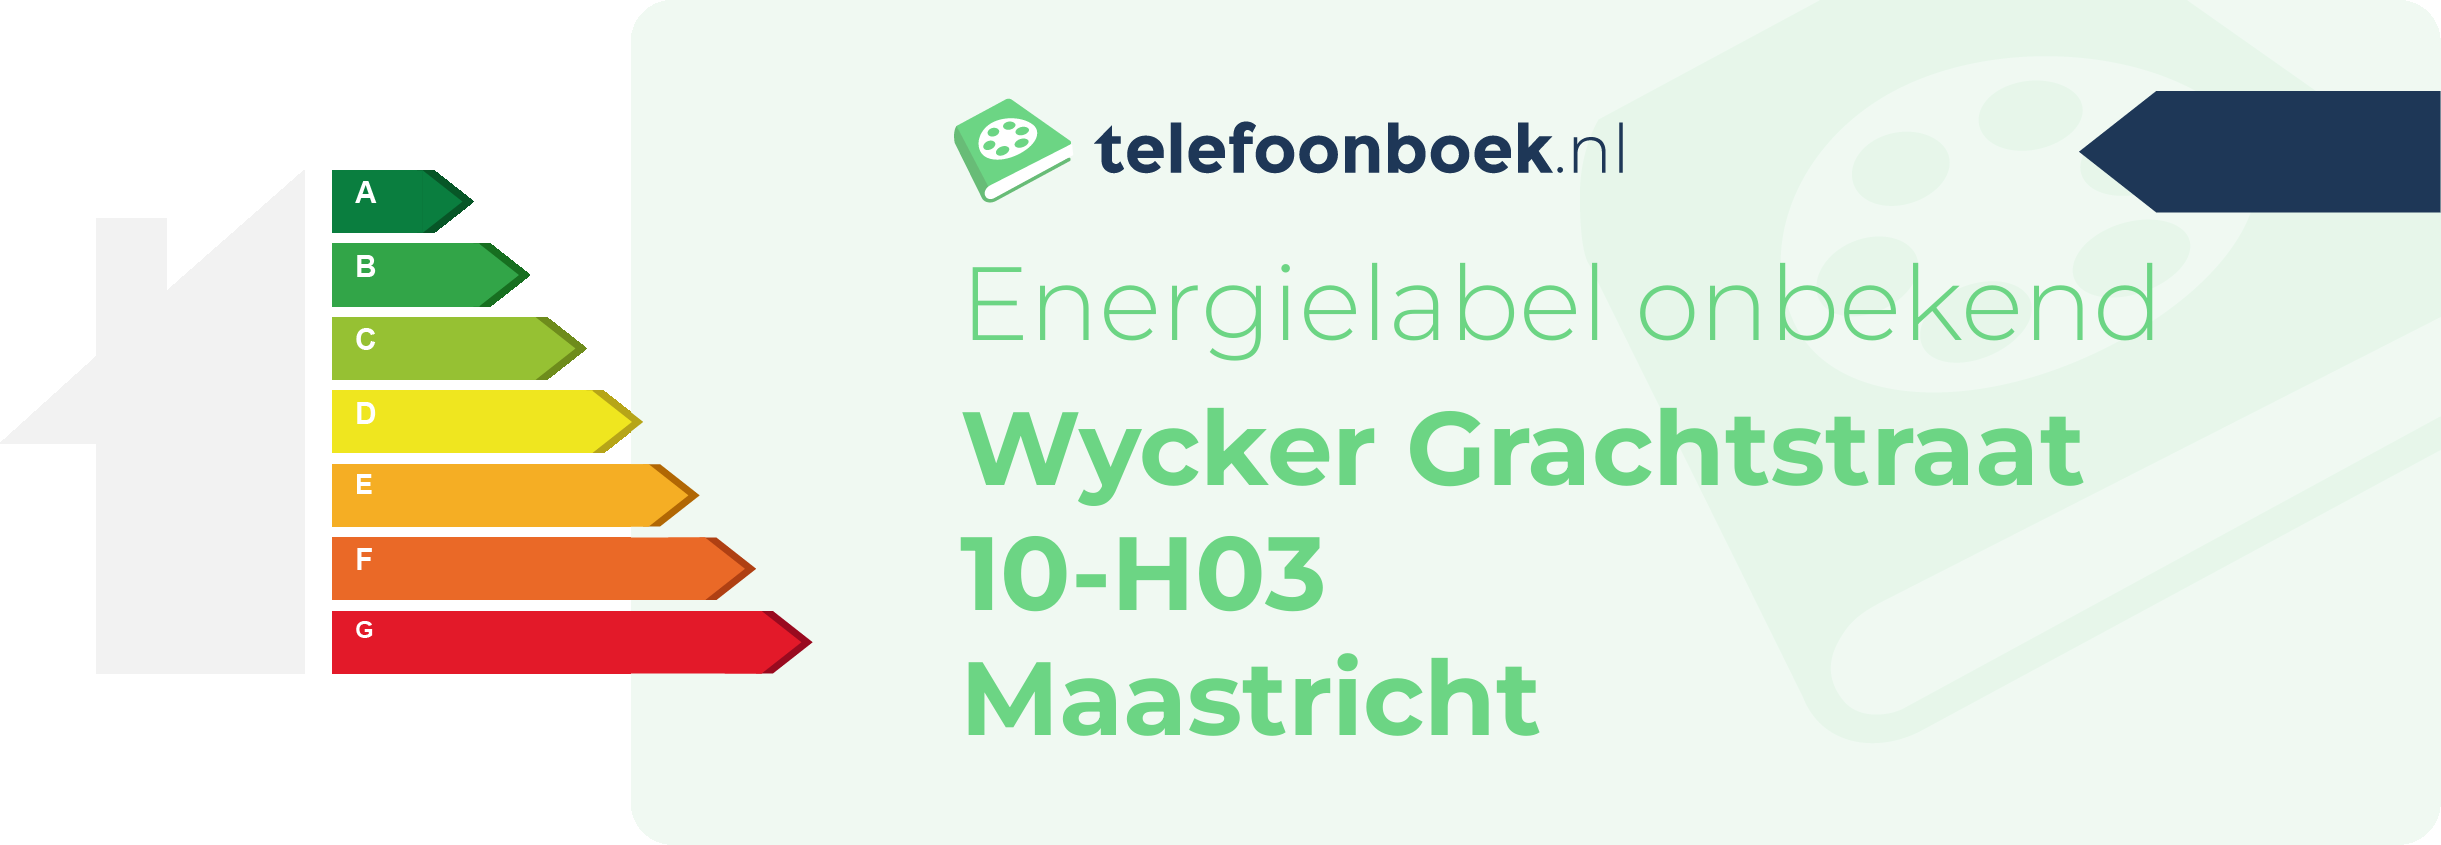 Energielabel Wycker Grachtstraat 10-H03 Maastricht